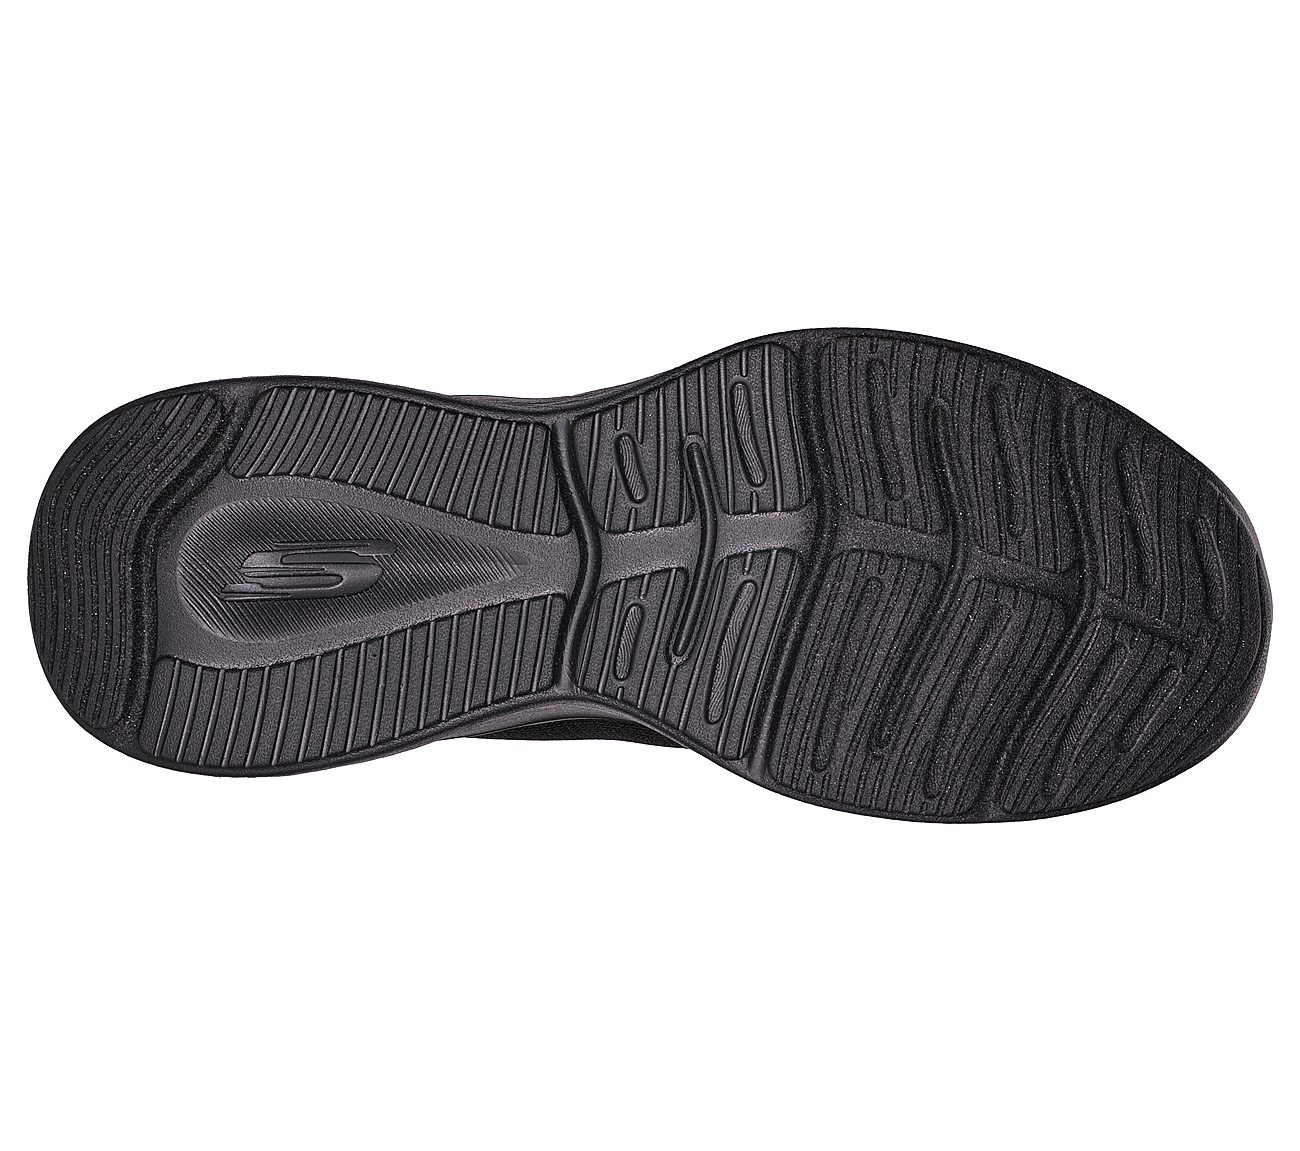 SKECH-LITE PRO - CLEAR RUSH, BBLACK Footwear Bottom View